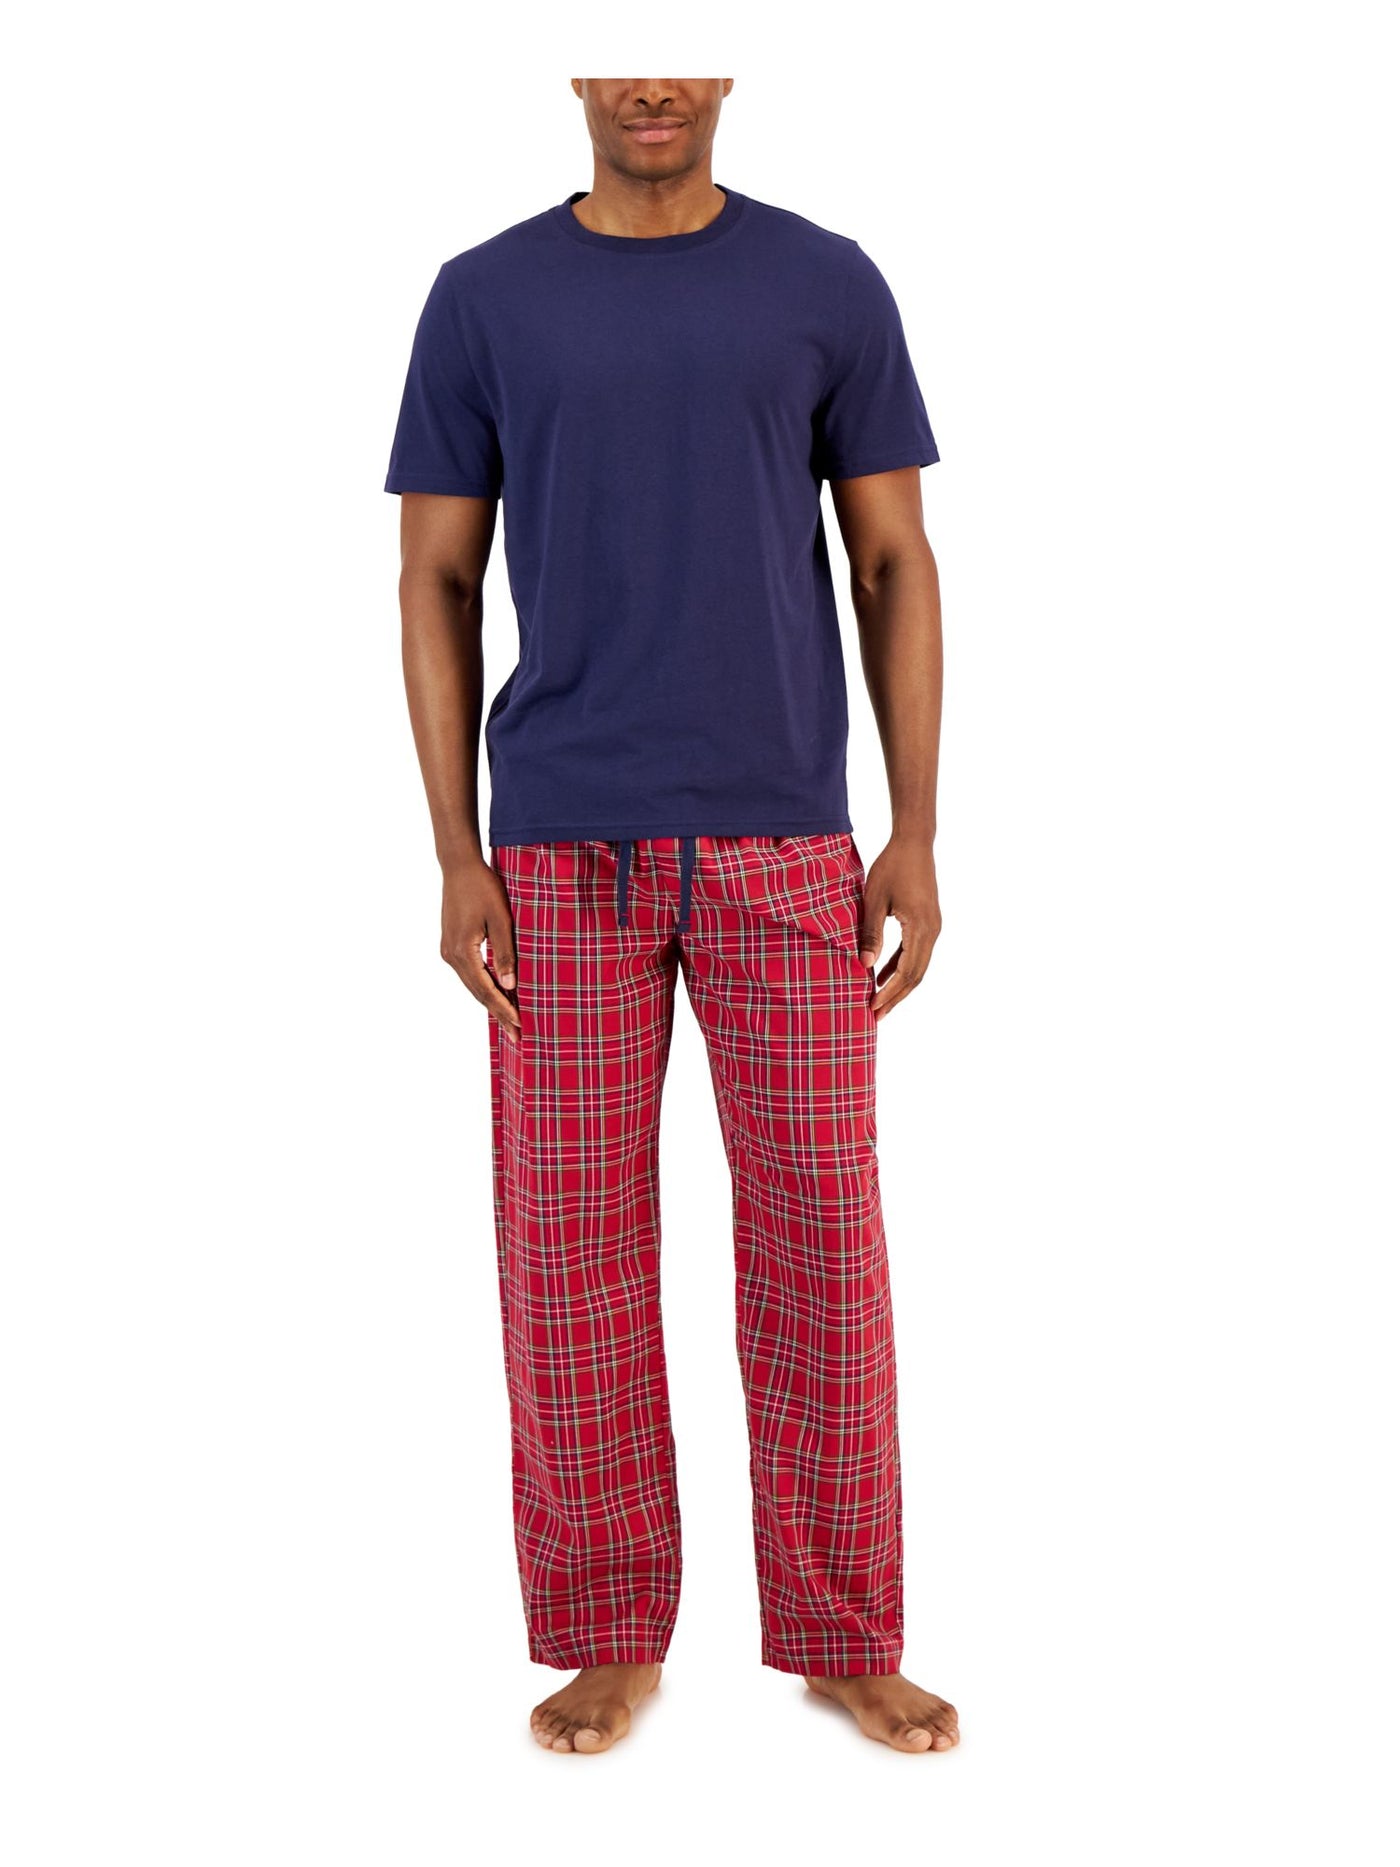 CLUBROOM Mens Navy Drawstring Short Sleeve T-Shirt Top Straight leg Pants Pajamas XXL